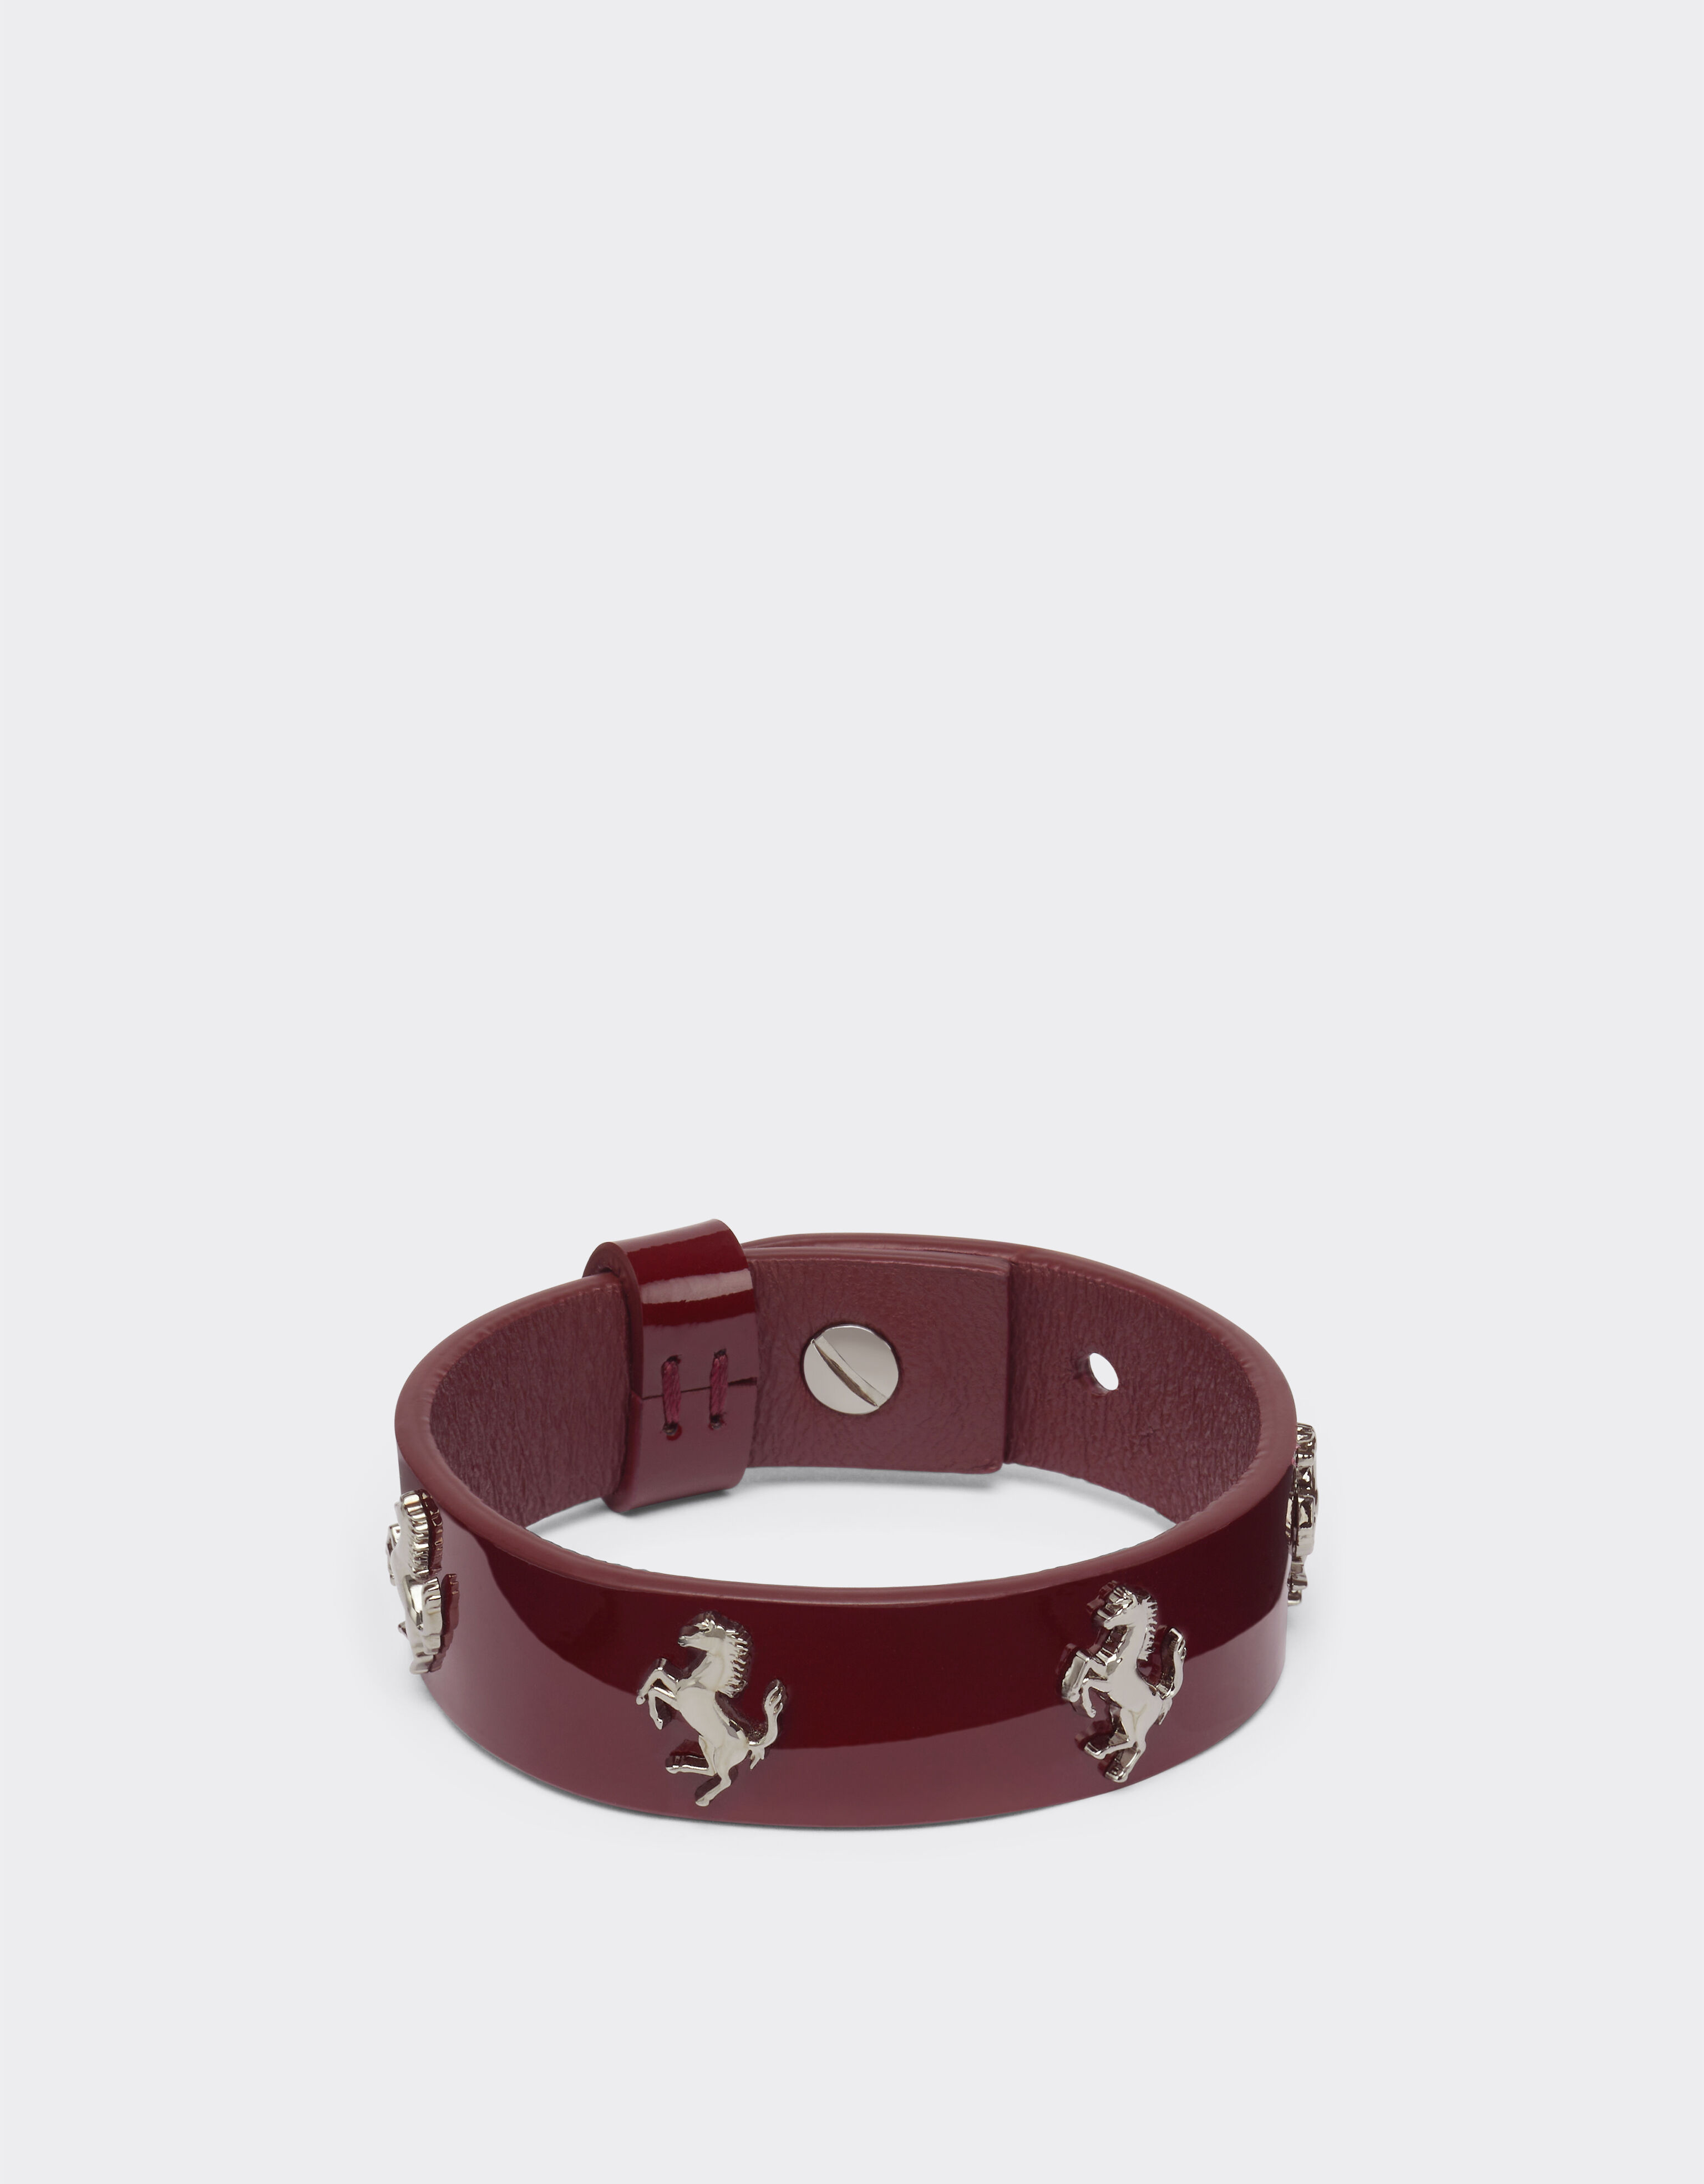 Ferrari Patent leather bracelet with studs Rosso Dino 20599f